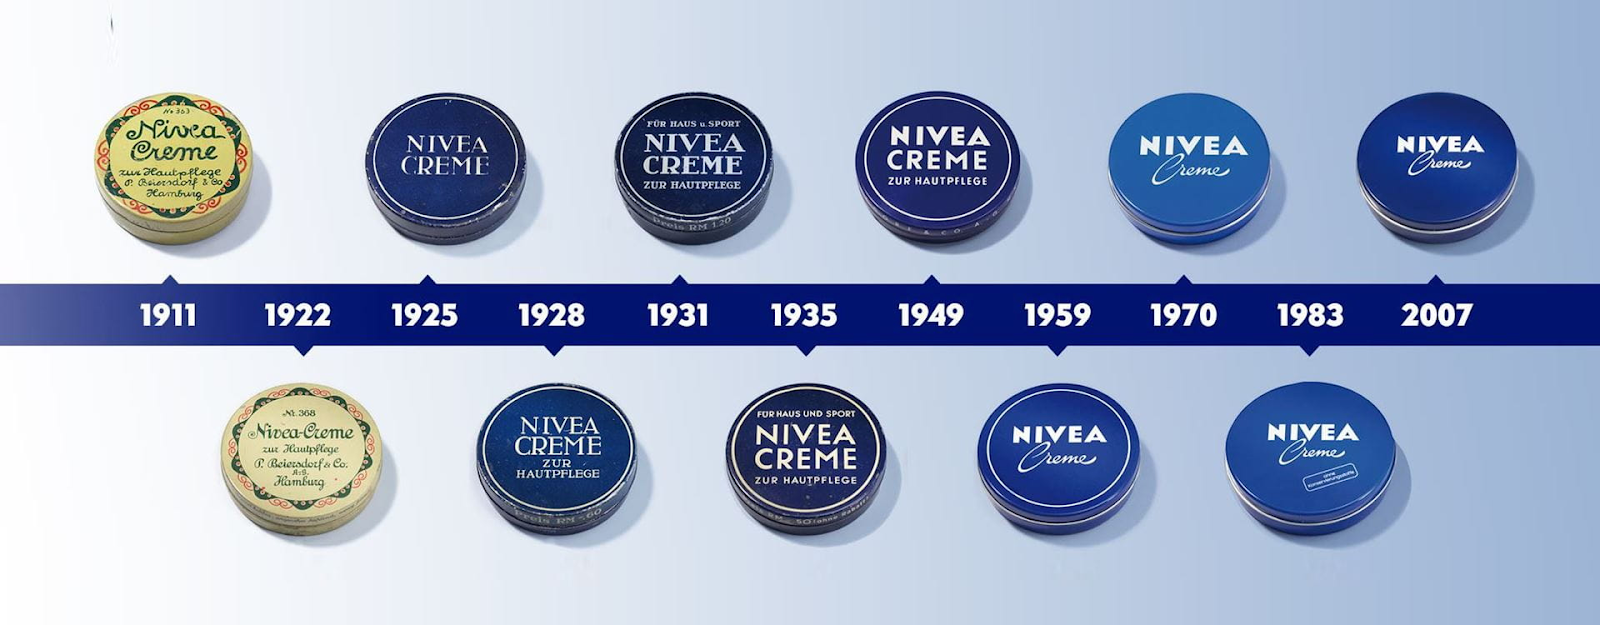 NIVEA青缶の歴史